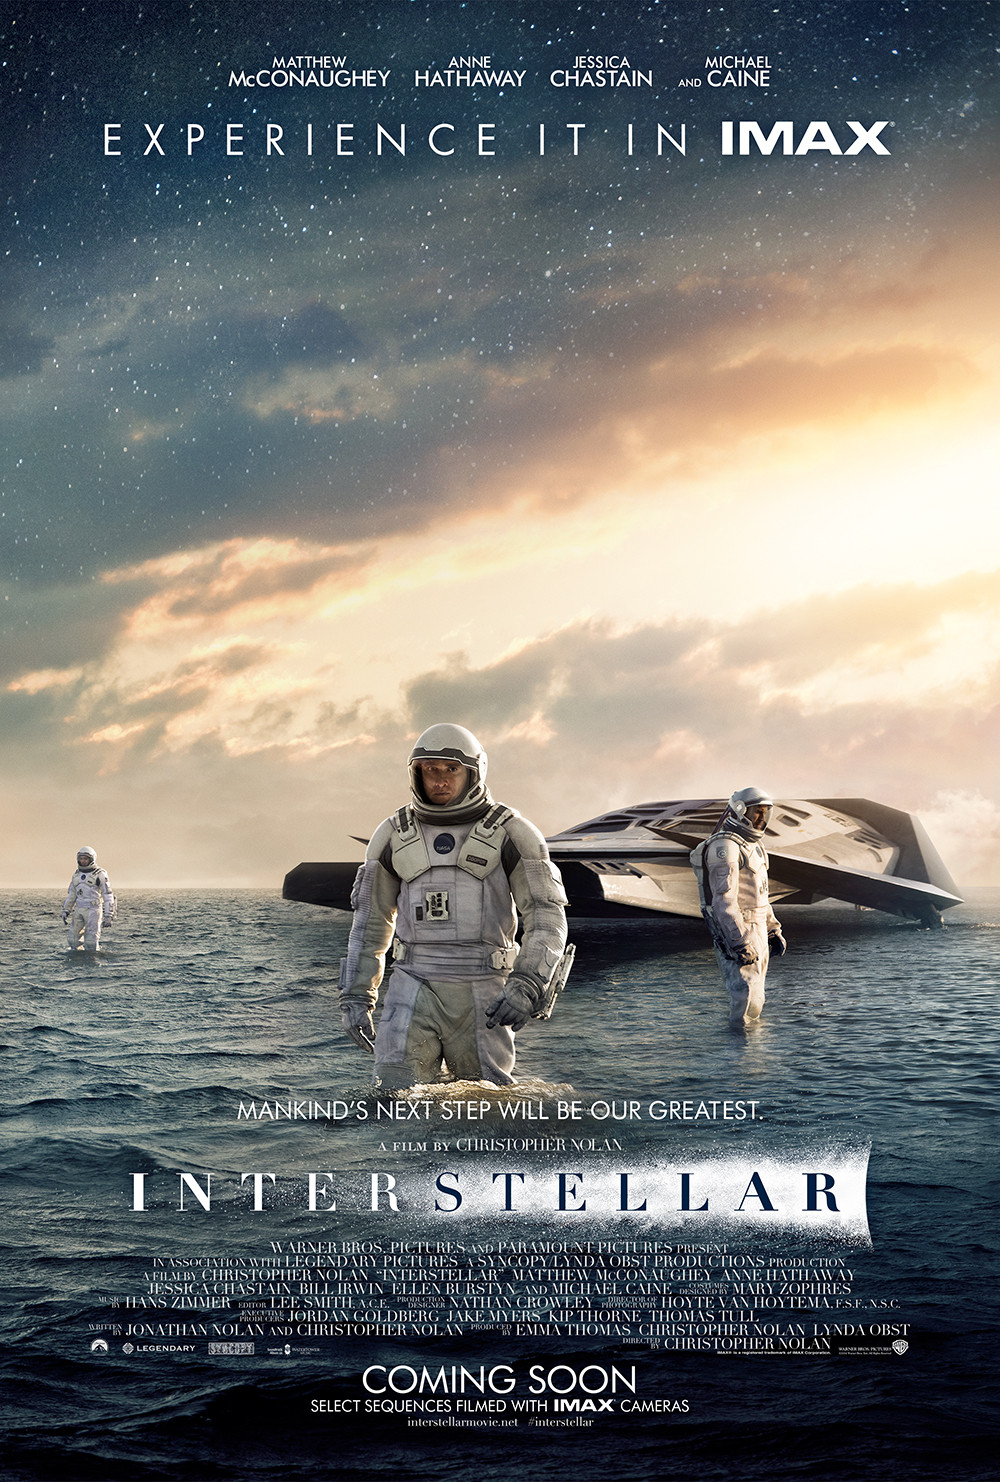 imax-poster-for-interstellar